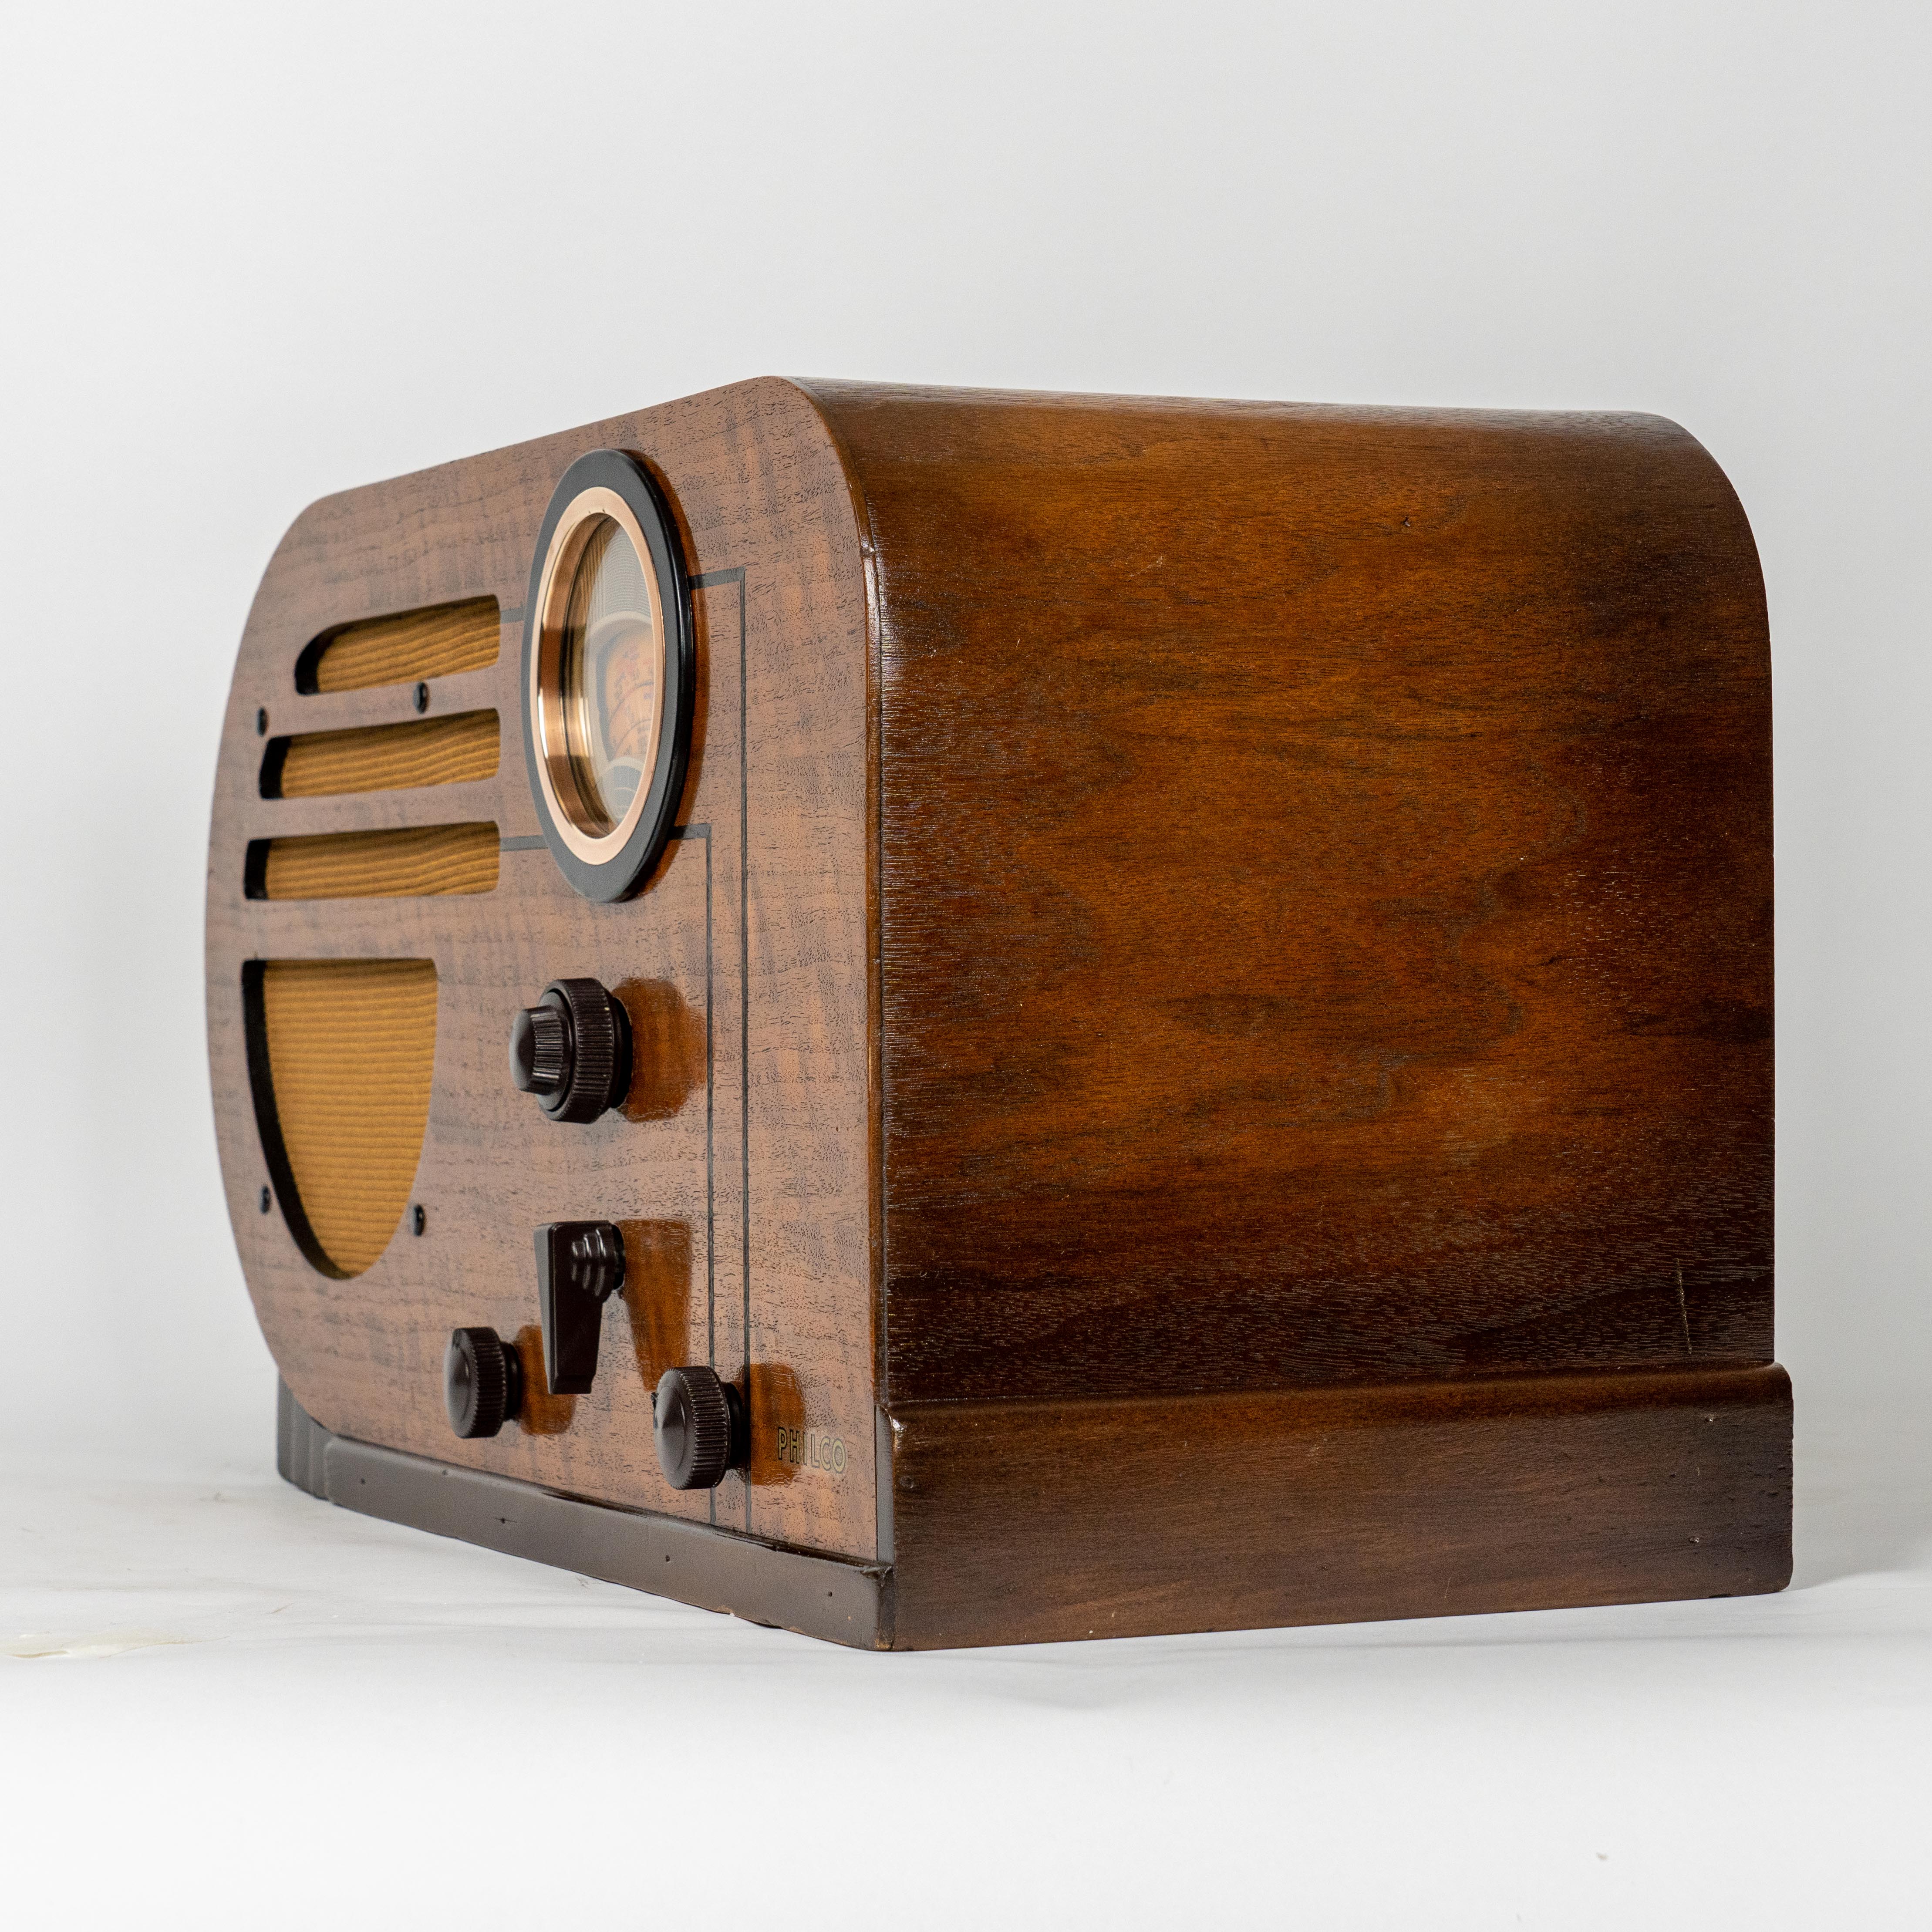 philco table radio